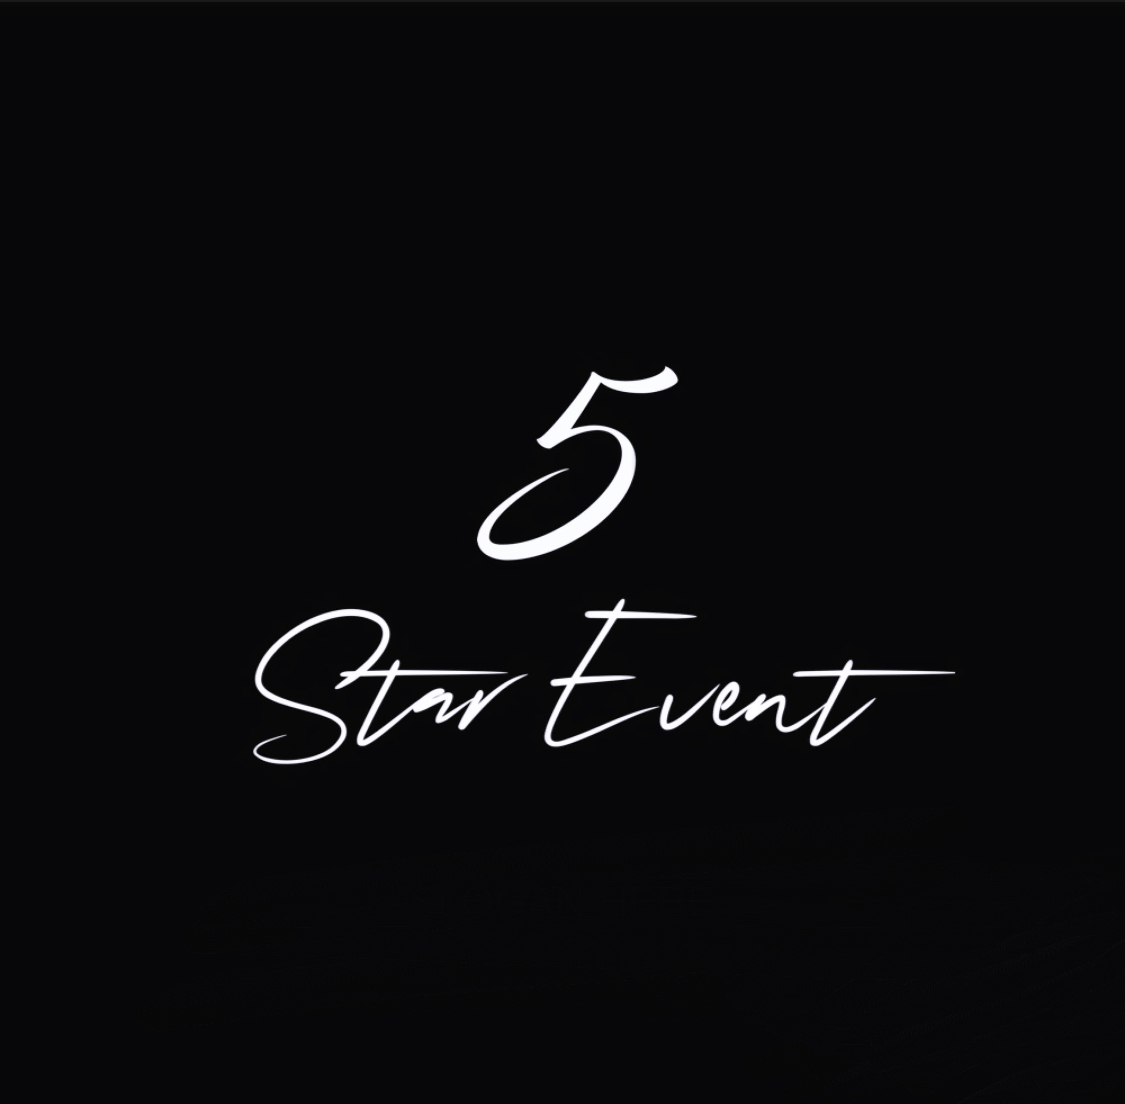 5 Star Event